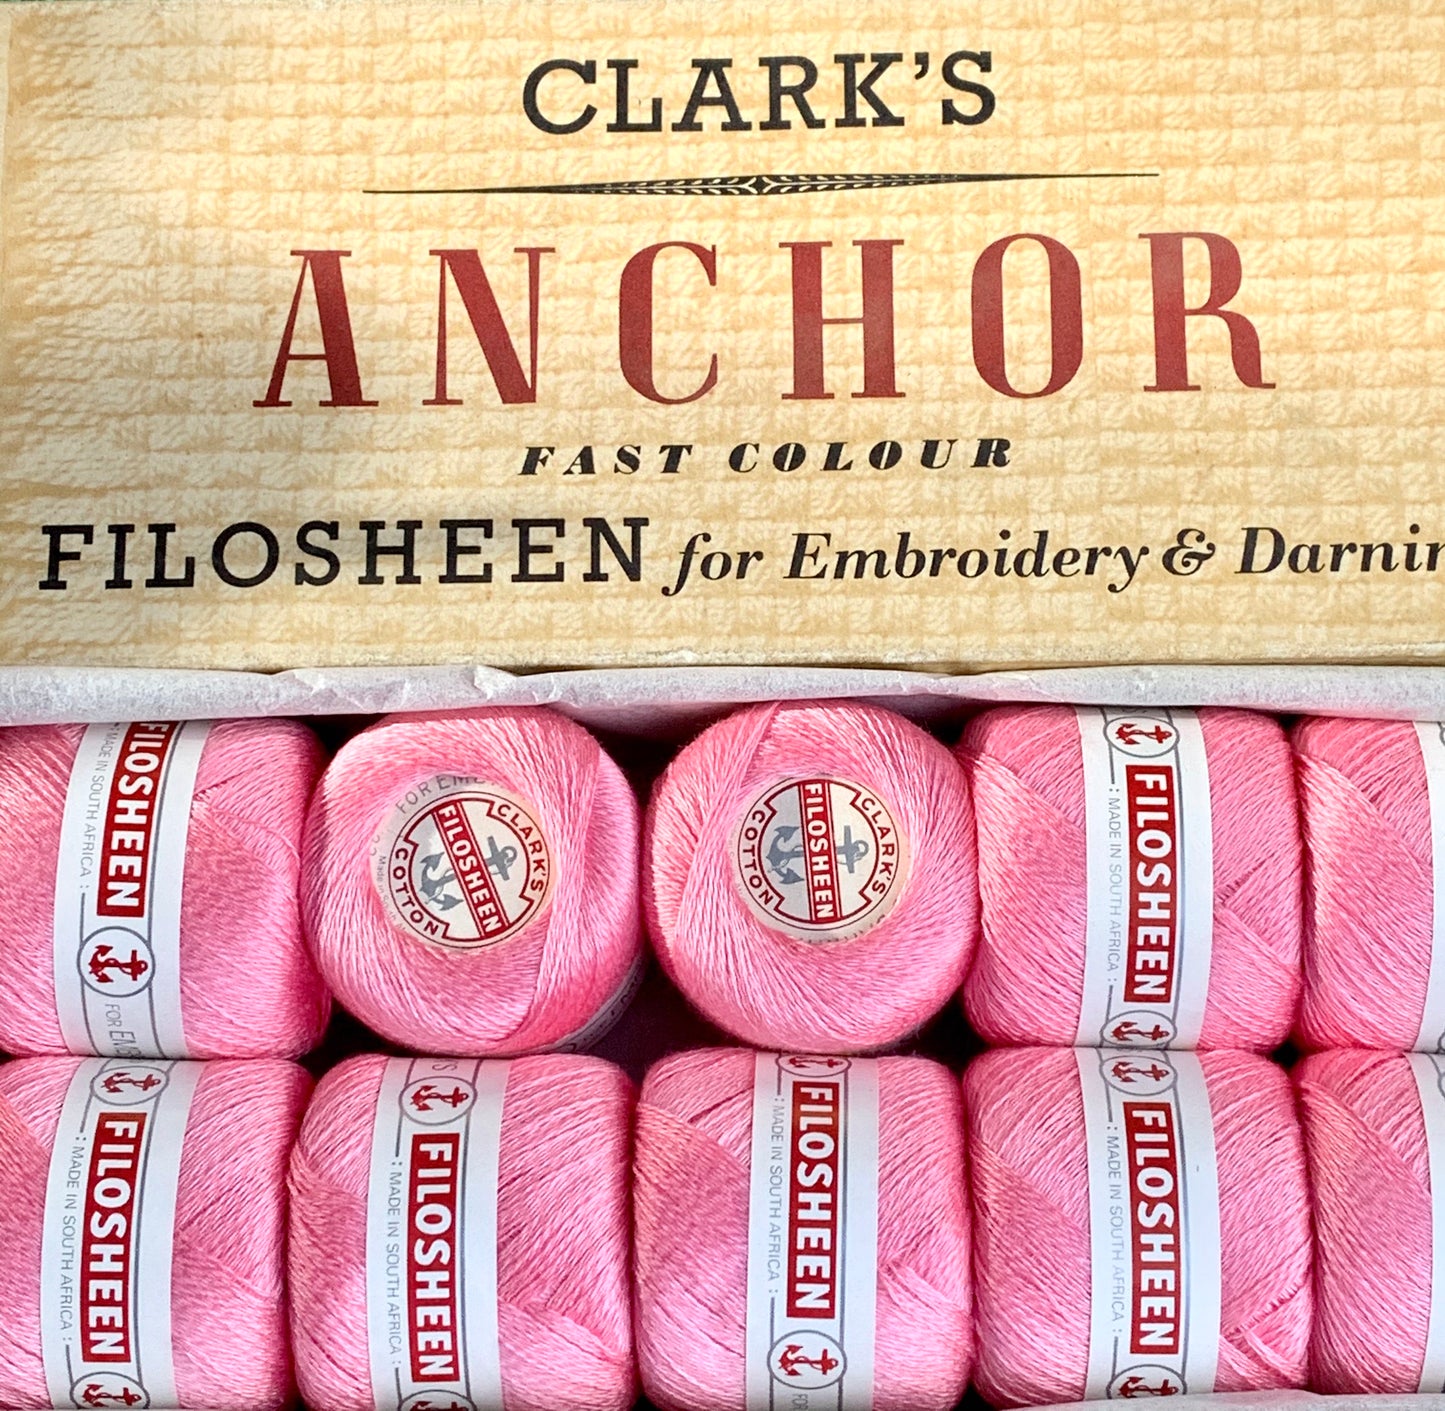 Vintage Anchor Filosheen Light Pink Cotton Embroidery or Darning Thread 12 balls x 22m (050)